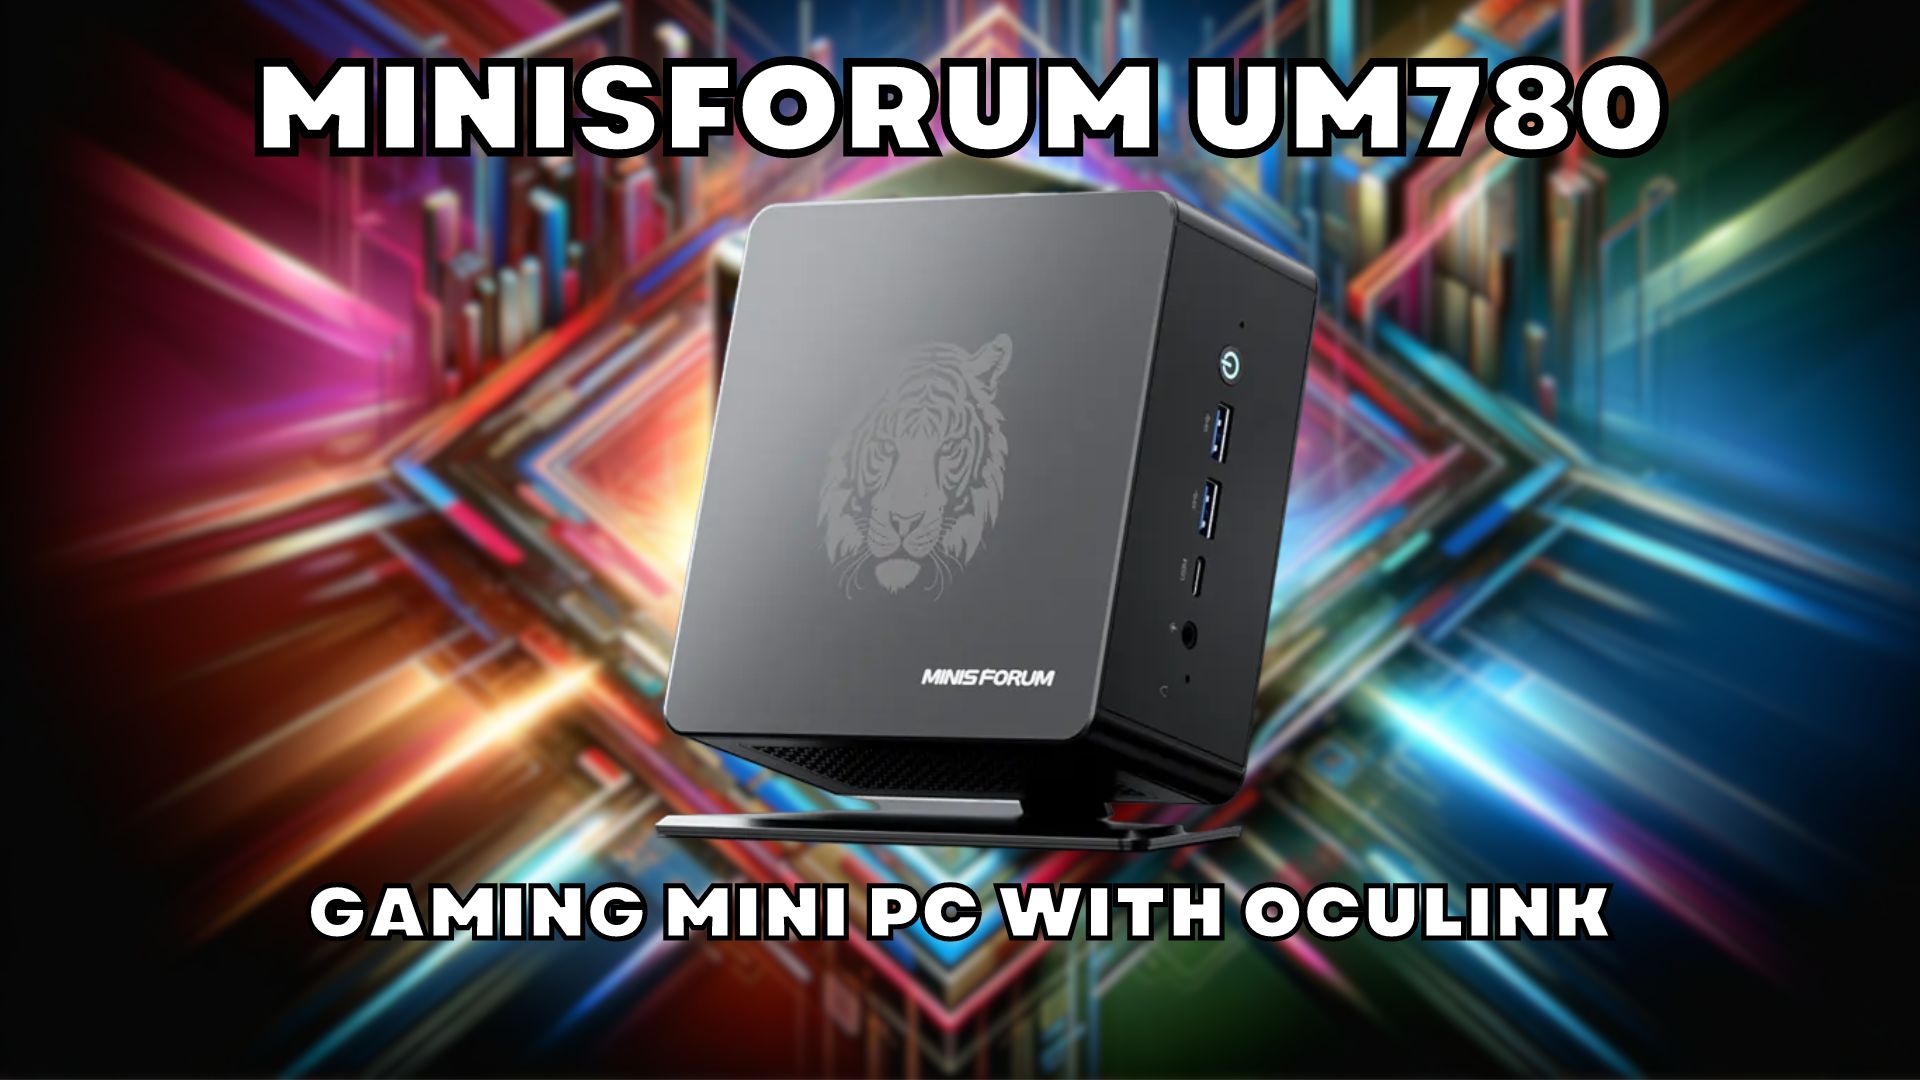 Minisforum UM780 XTX review – Our fastest gaming mini PC reviewed so far